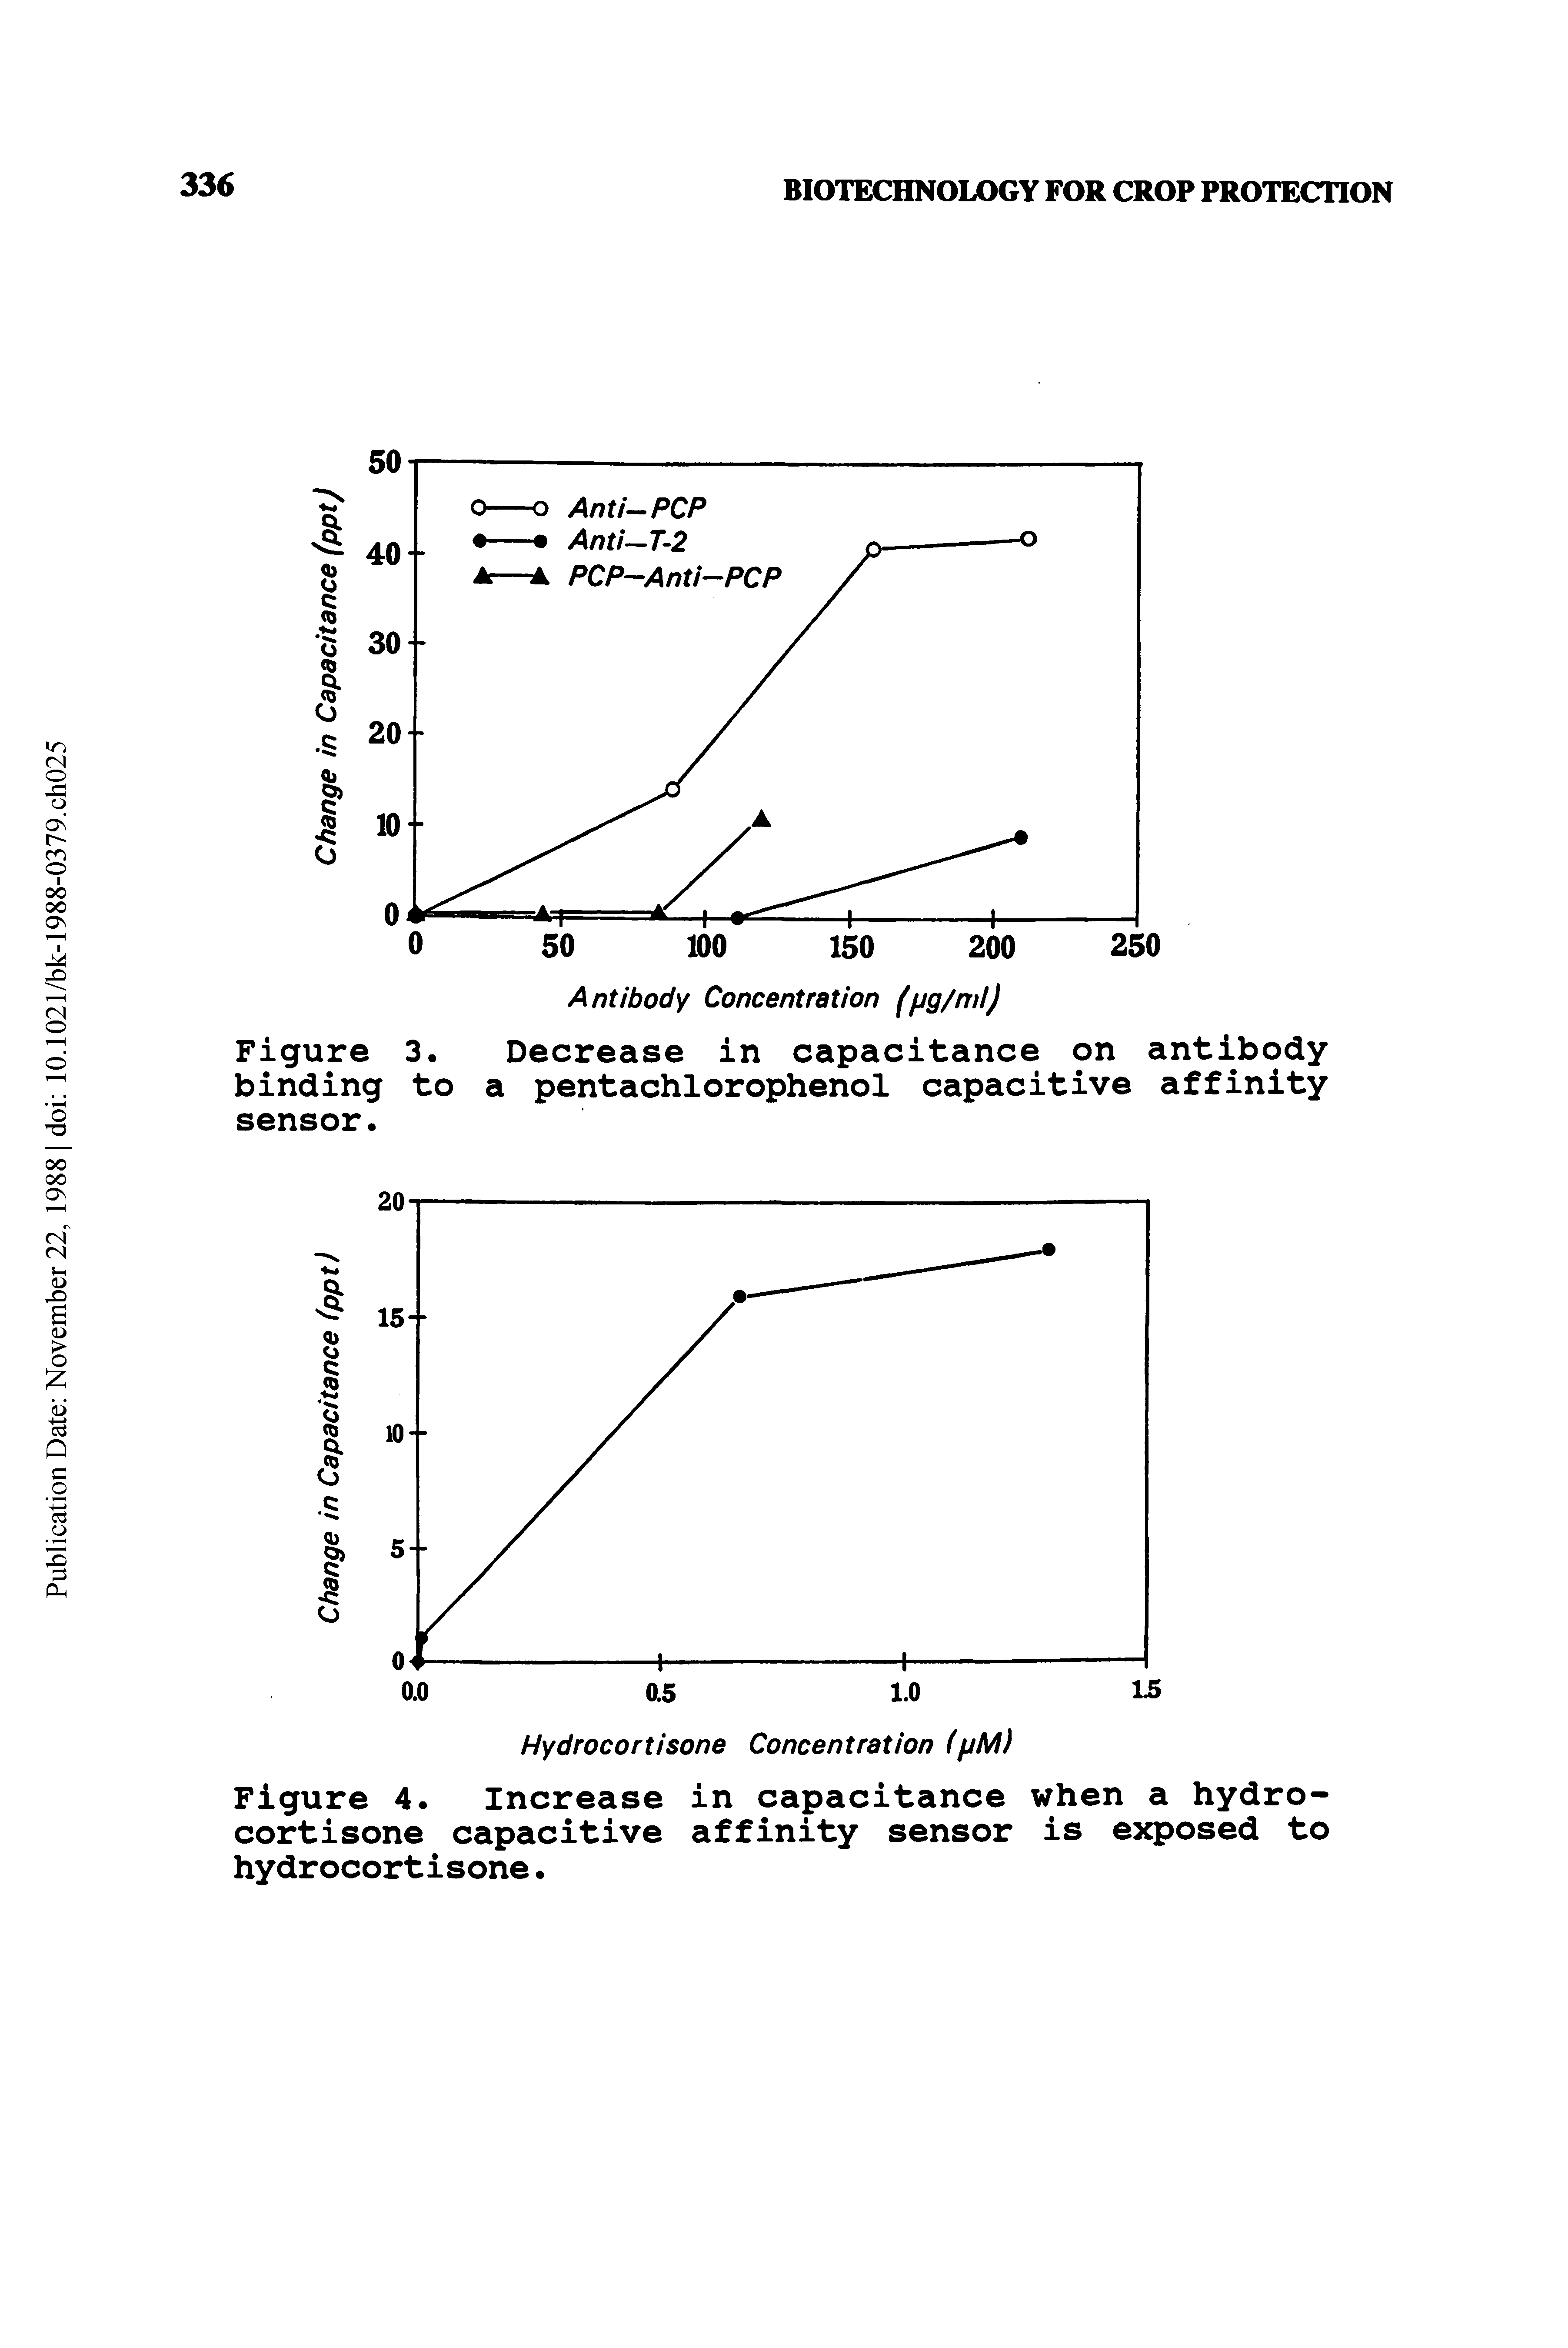 Figure 3. Decrease in capacitance on antibody binding to a pentachlorophenol capacitive affinity sensor.